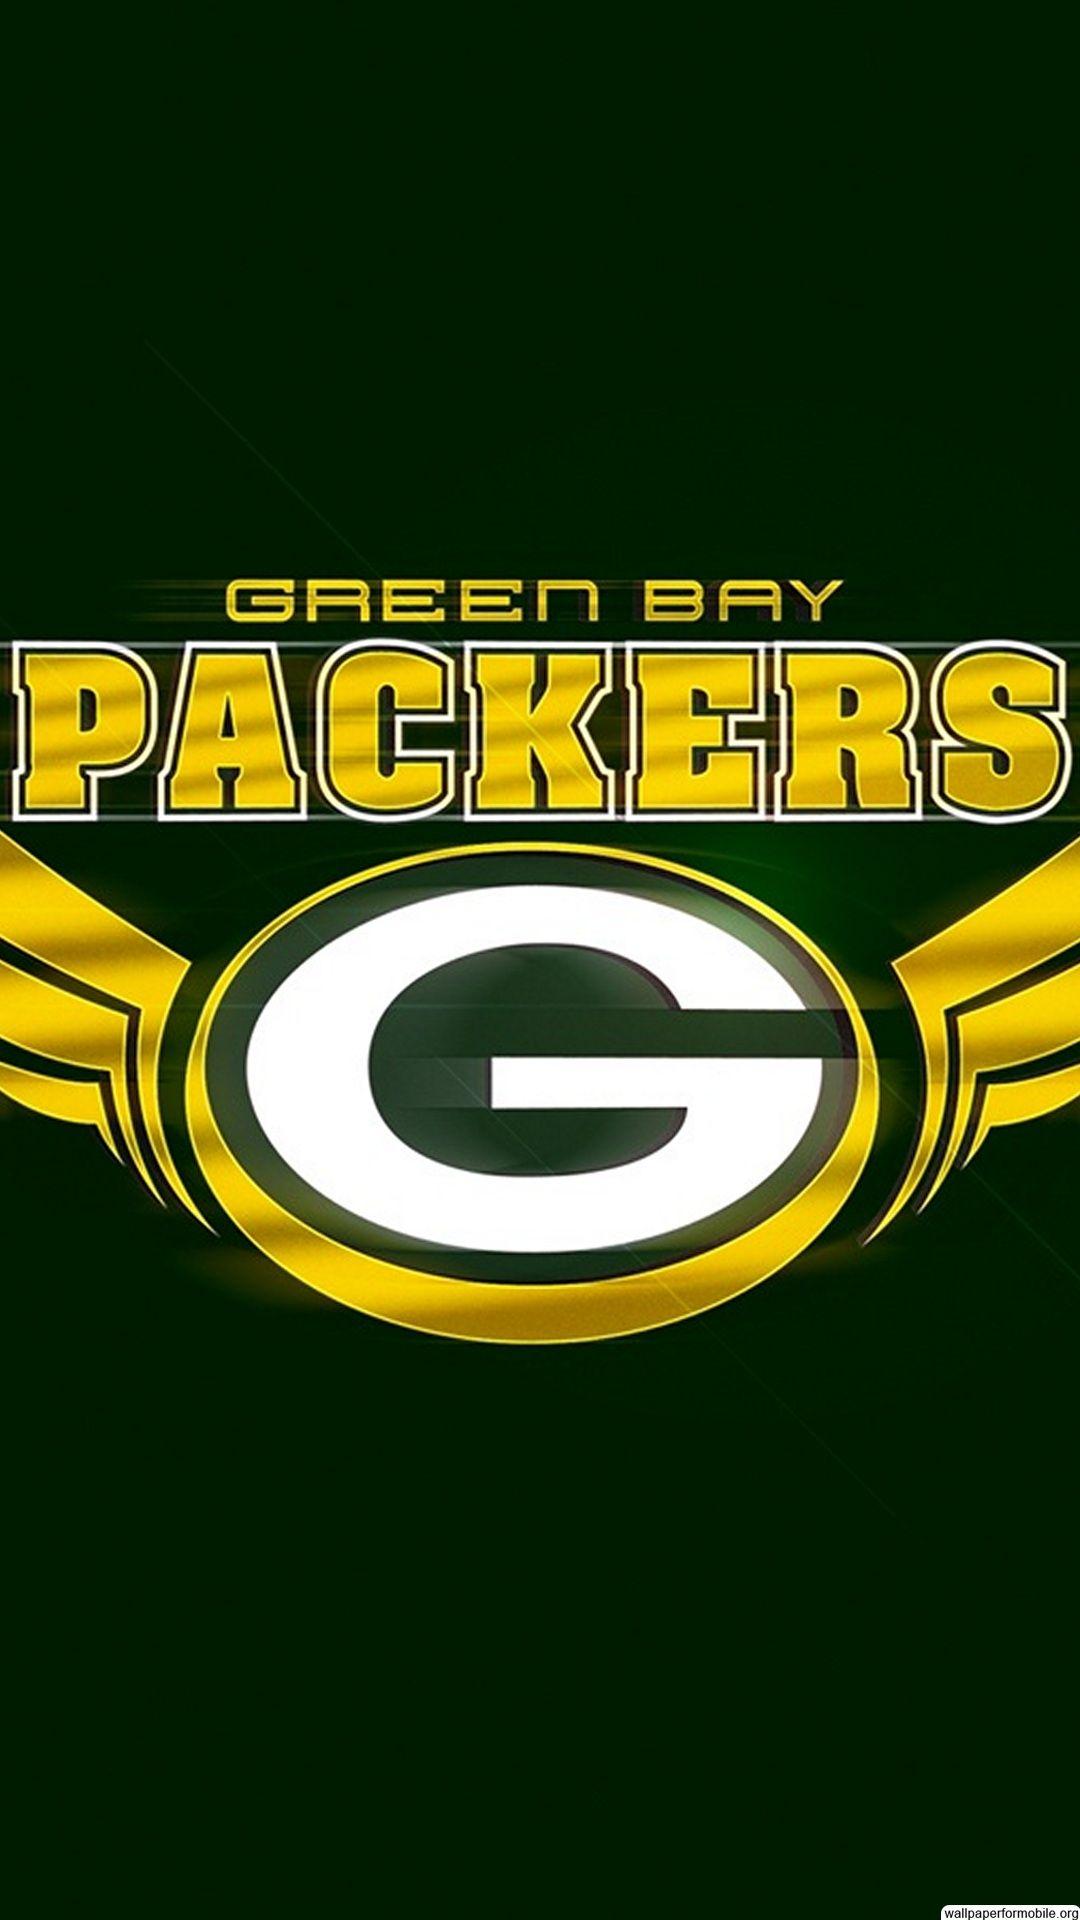 Green Bay Packers Wallpaper logos green bay packer' packers